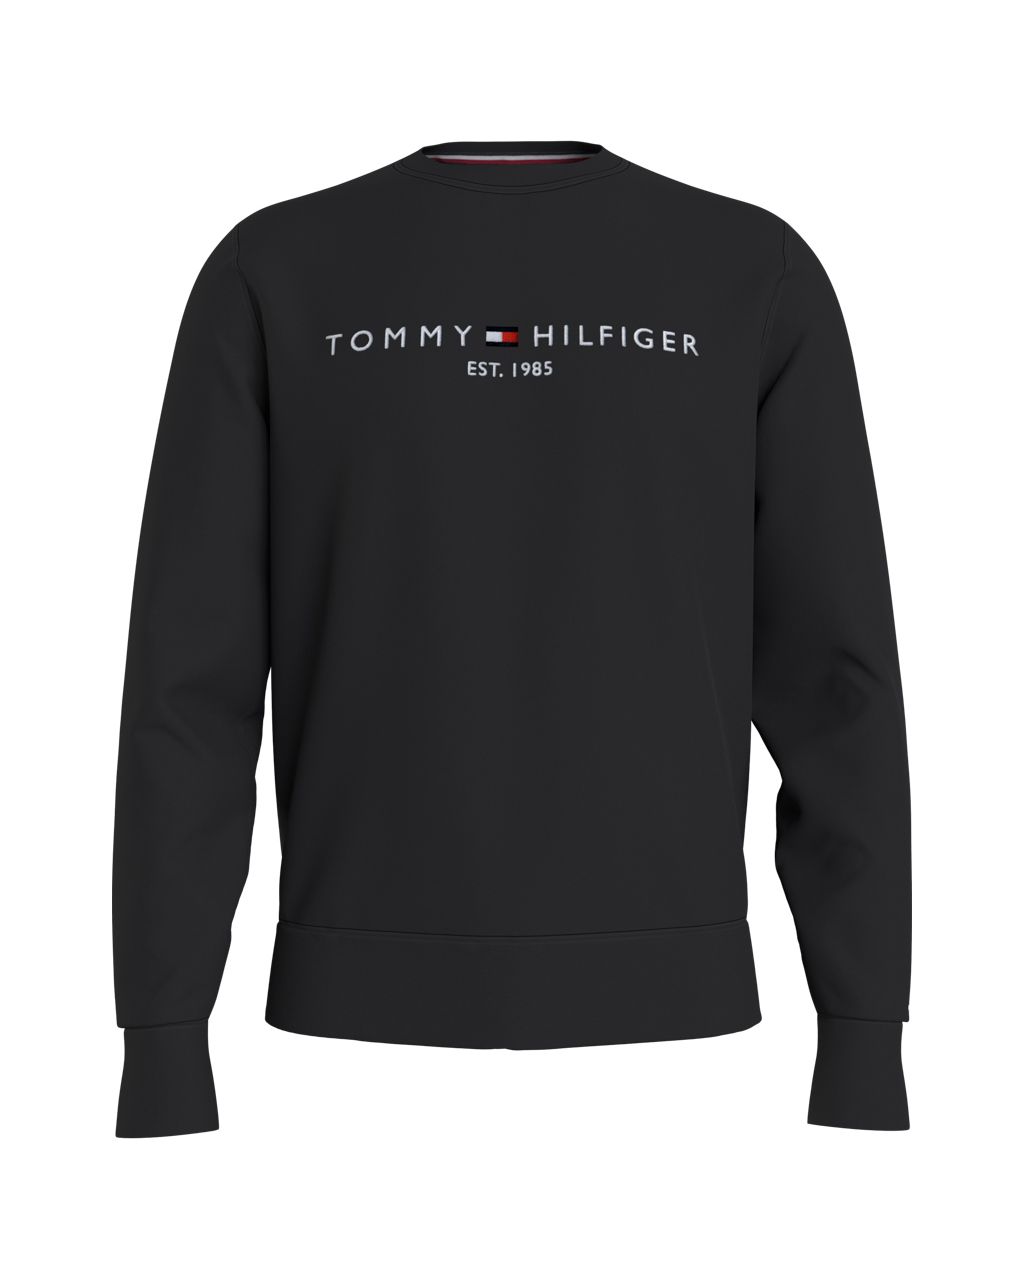 Tommy Hilfiger Menswear Sweater Zwart 064270-001-L